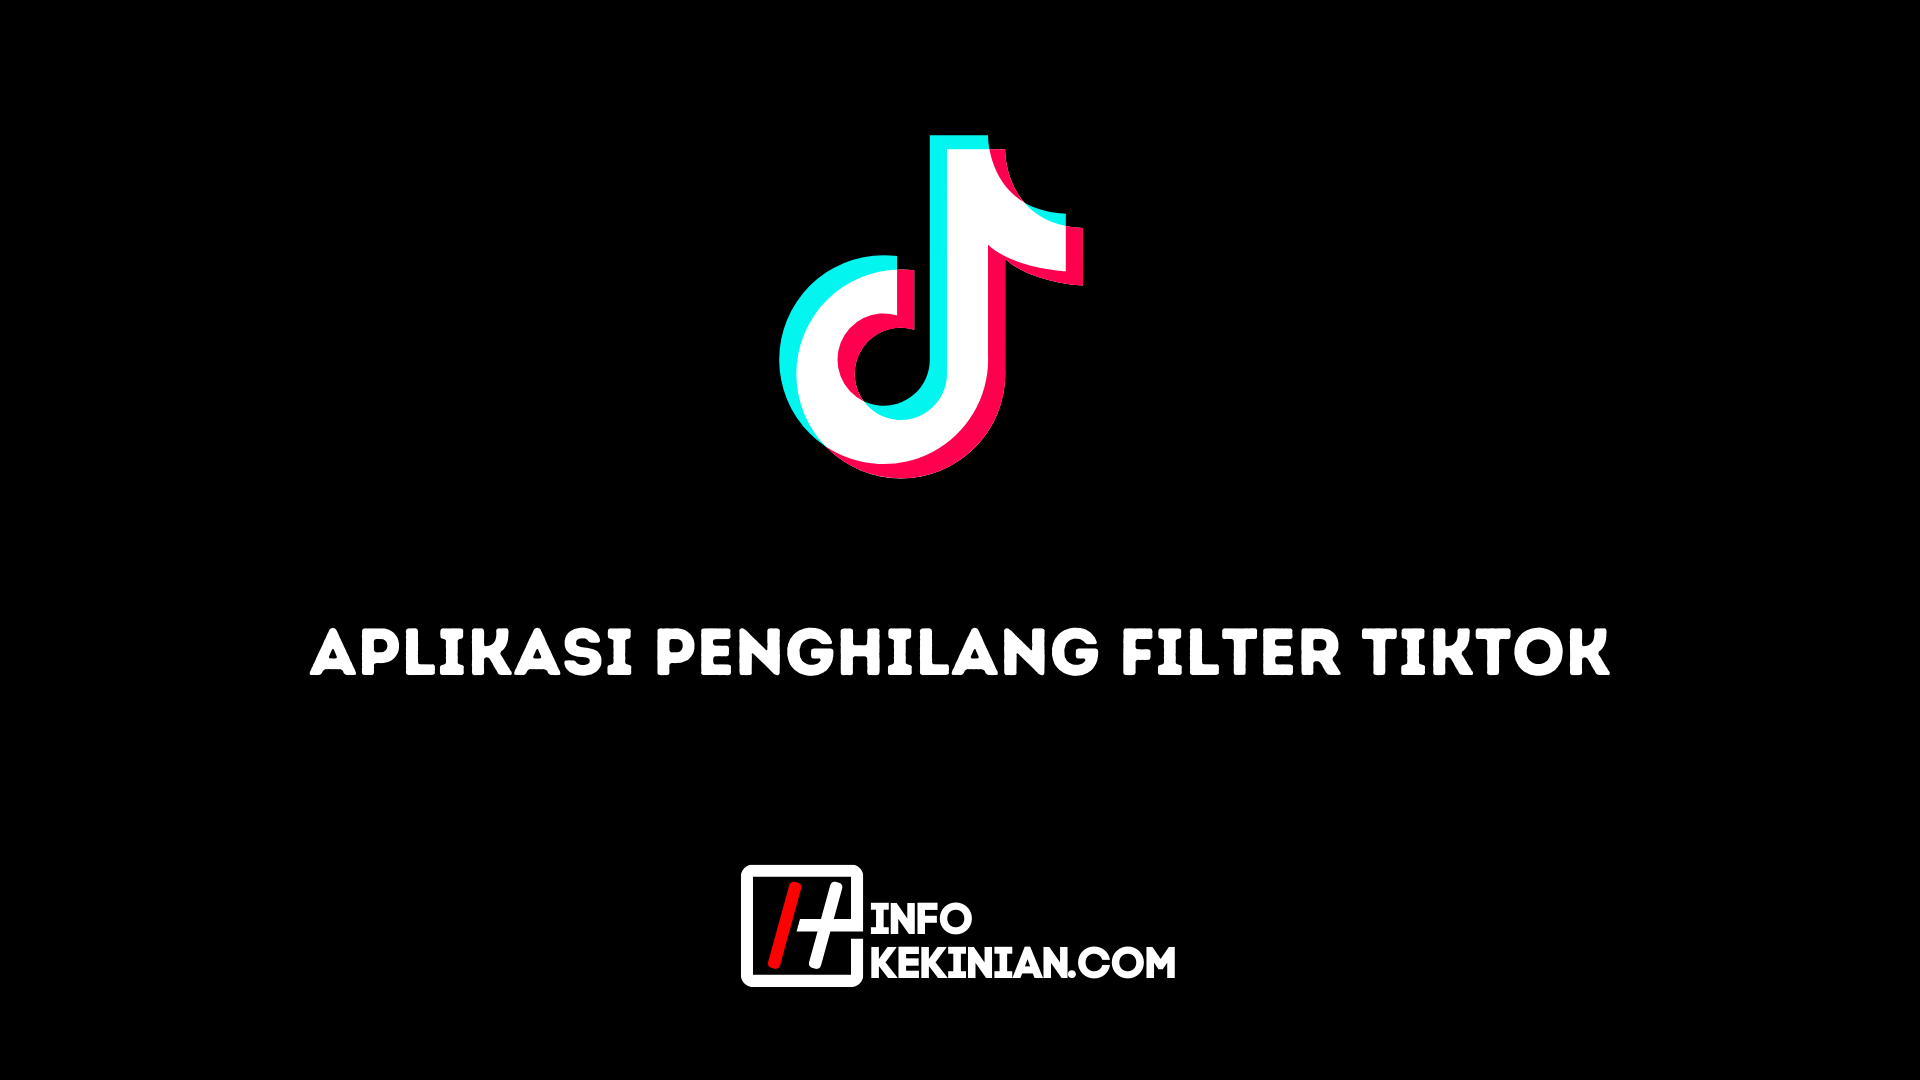 Application de suppression de filtre TikTok